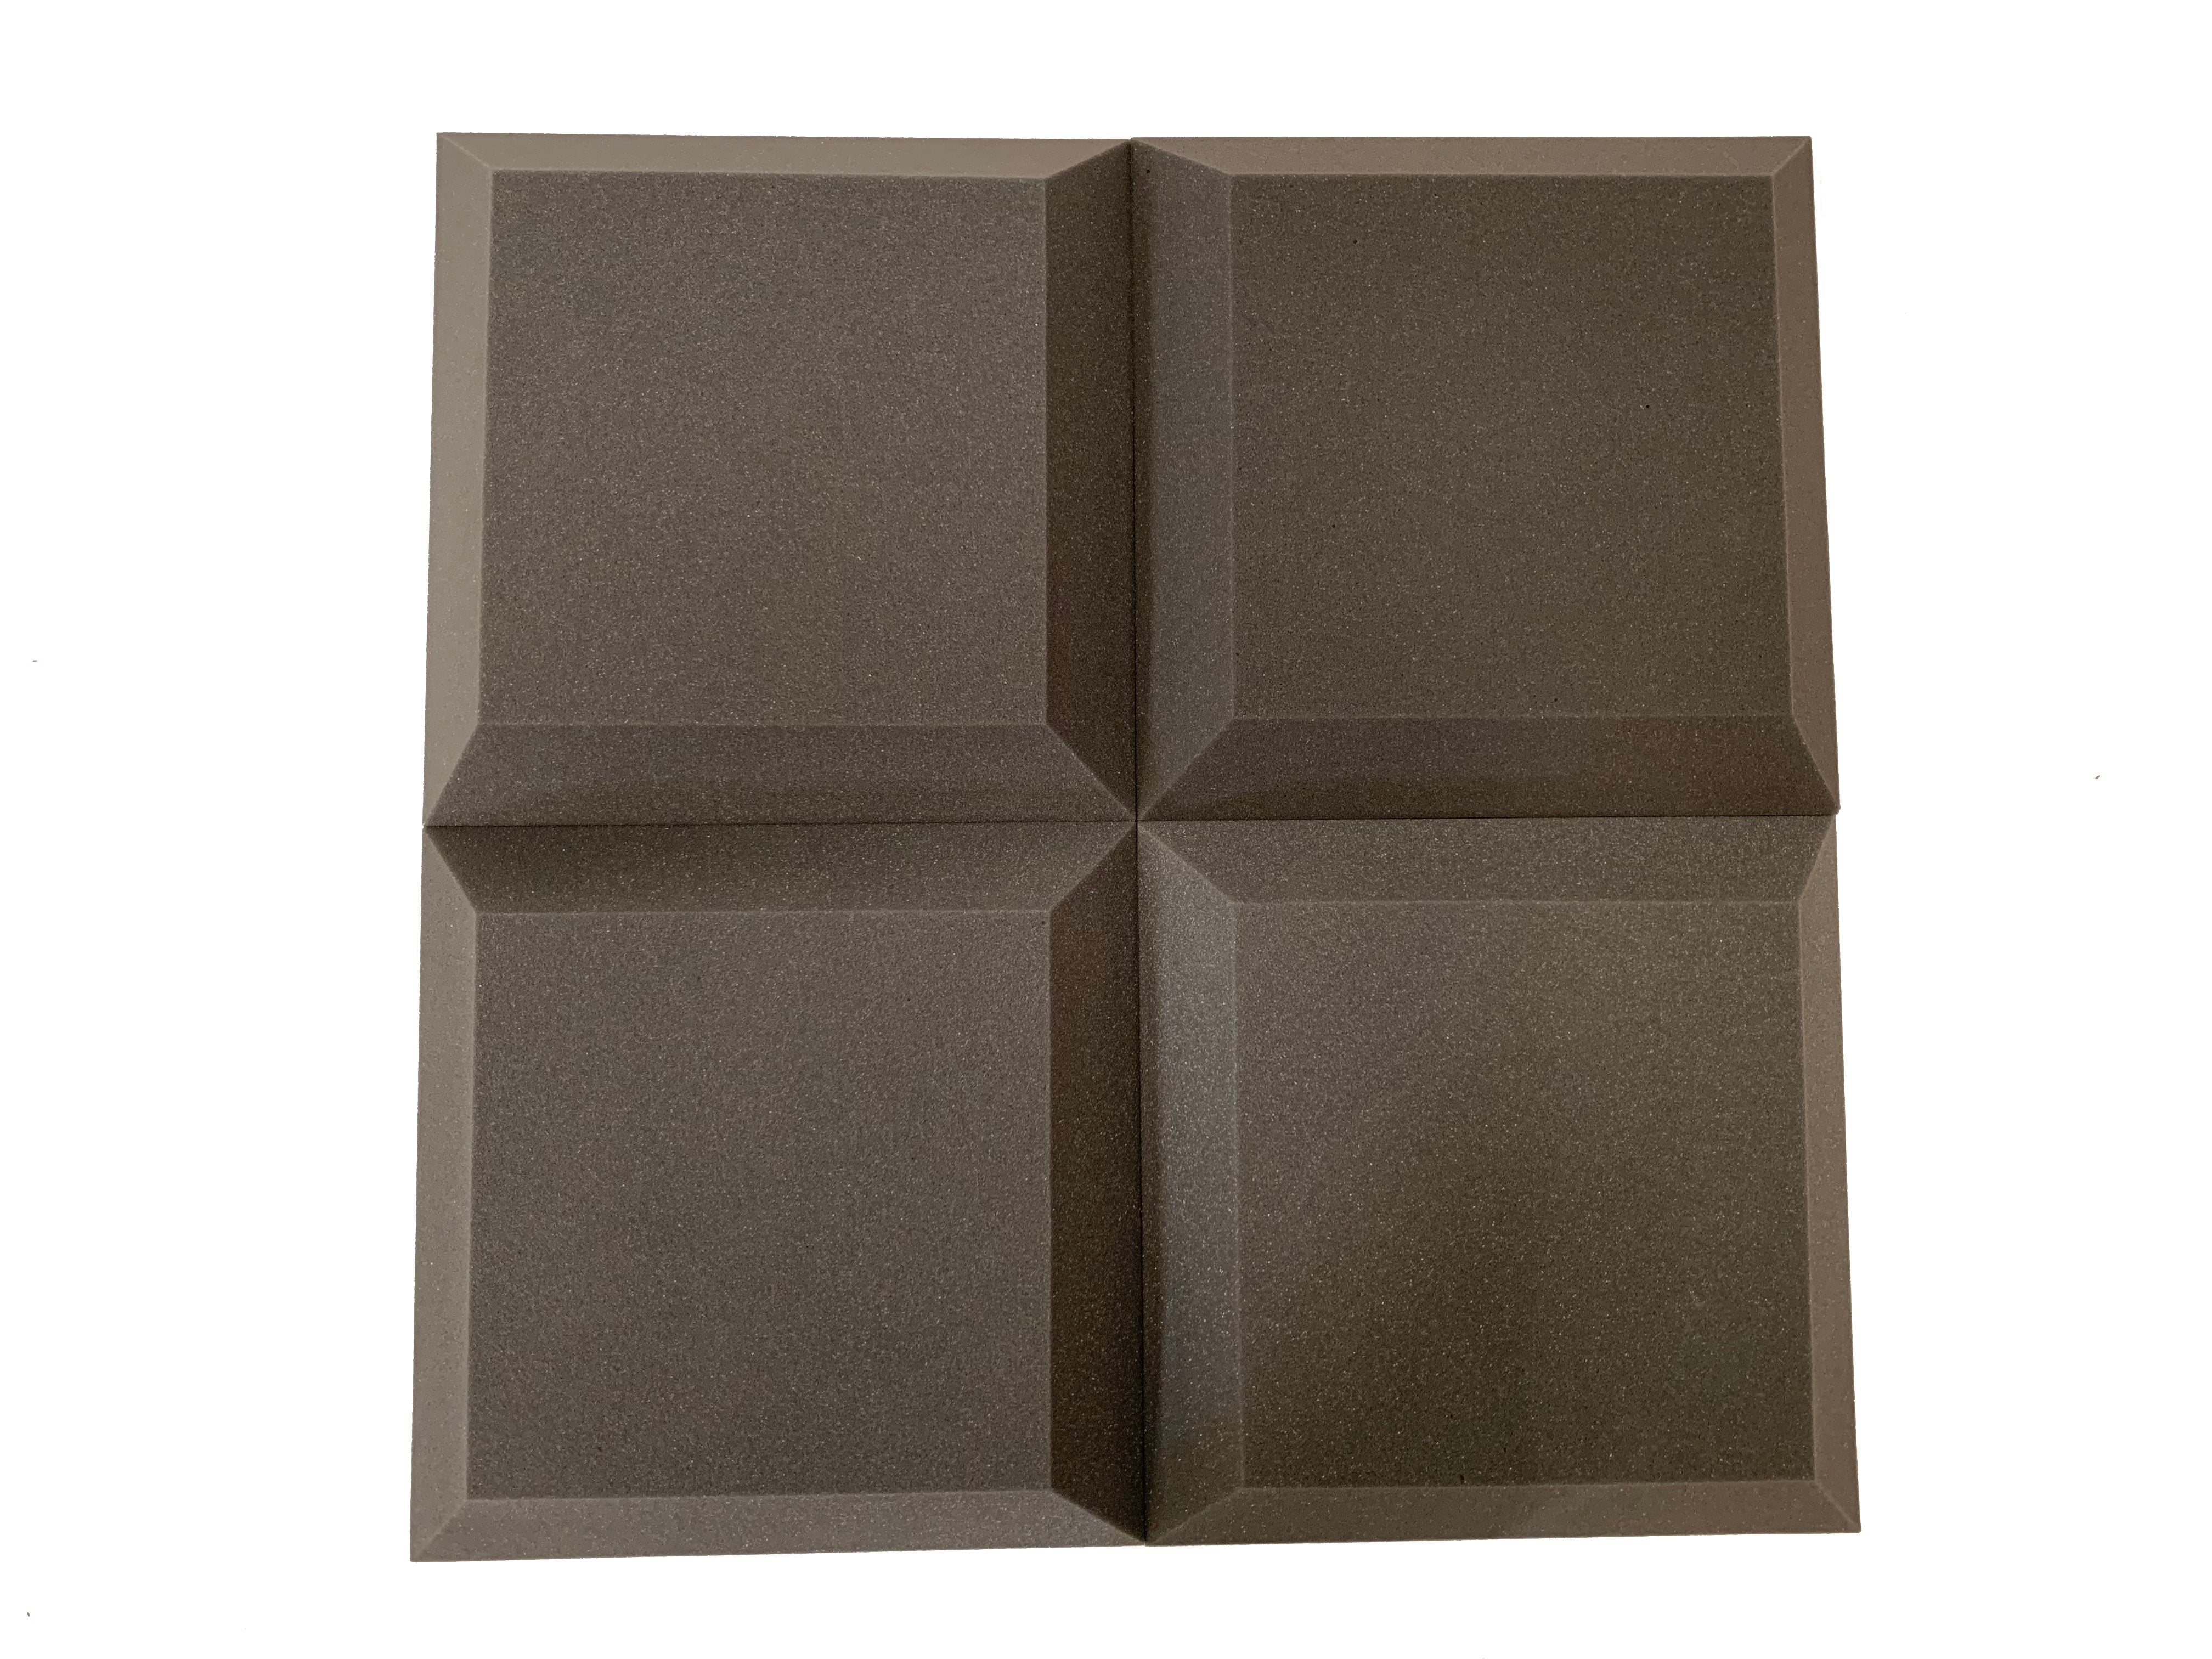 Euphonic Wedge PRO Acoustic Studio Foam Tile Pack - Advanced Acoustics